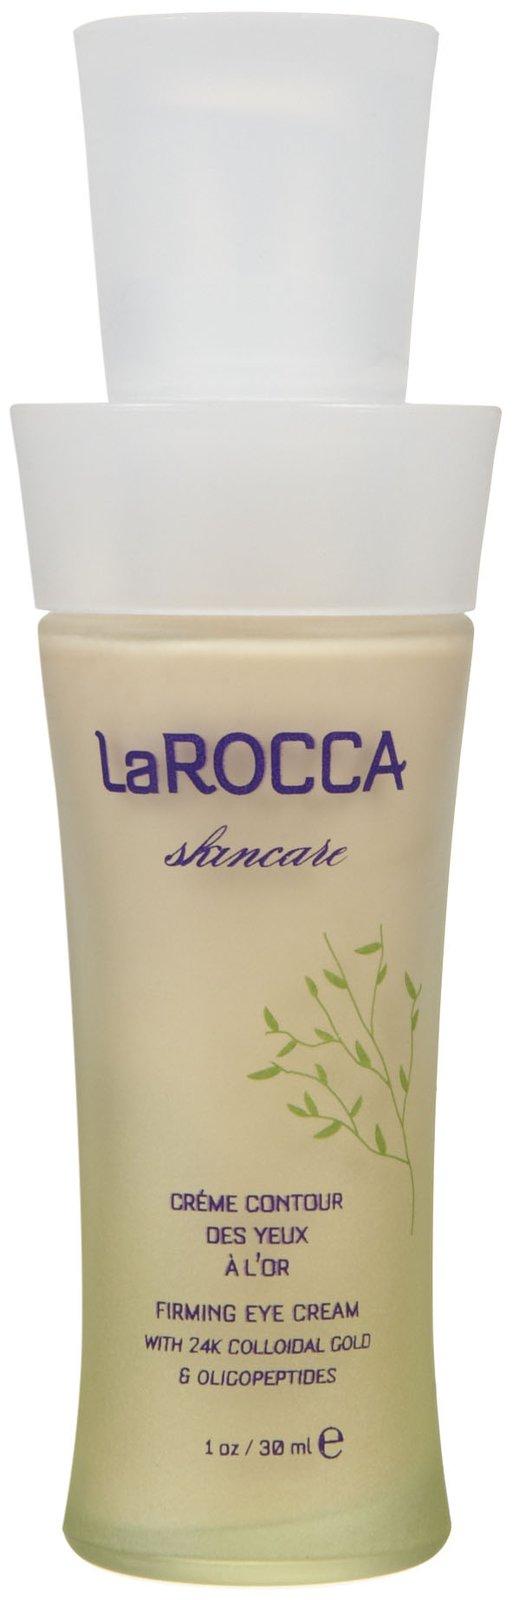 Larocca Skincare Firming Eye Cream